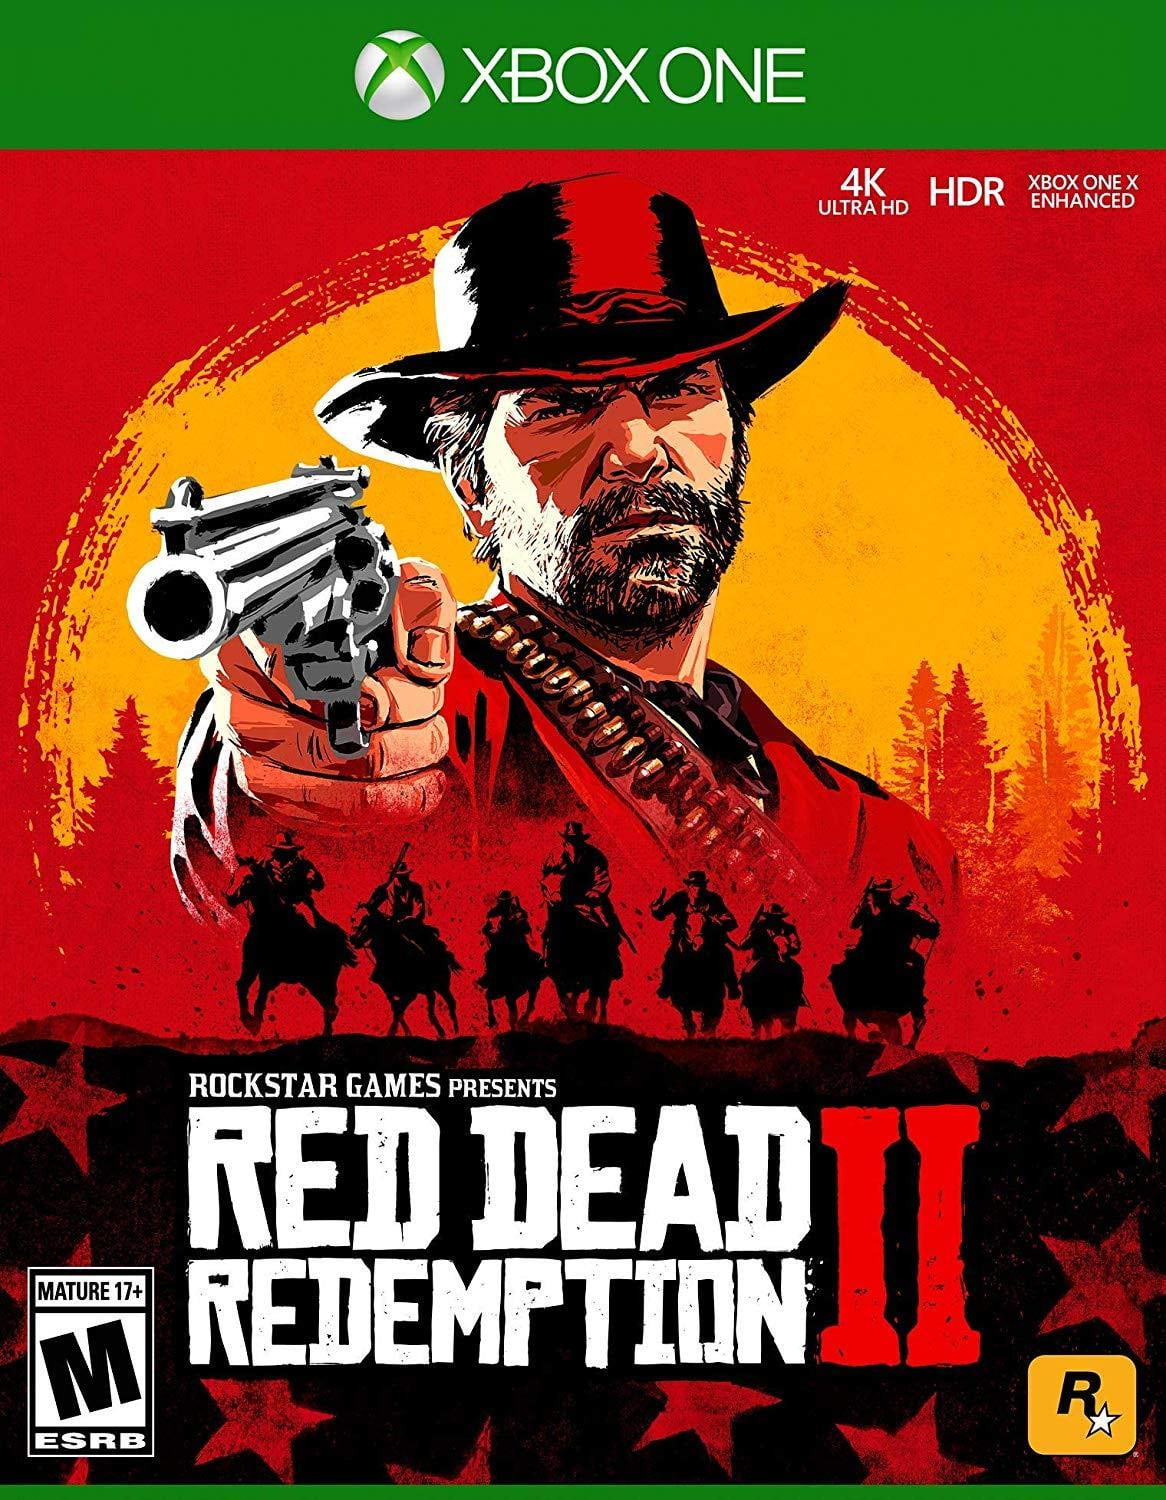 Vacation Slovenia University Red Dead Redemption 2, Rockstar Games, Xbox One, 710425498916 - Walmart.com